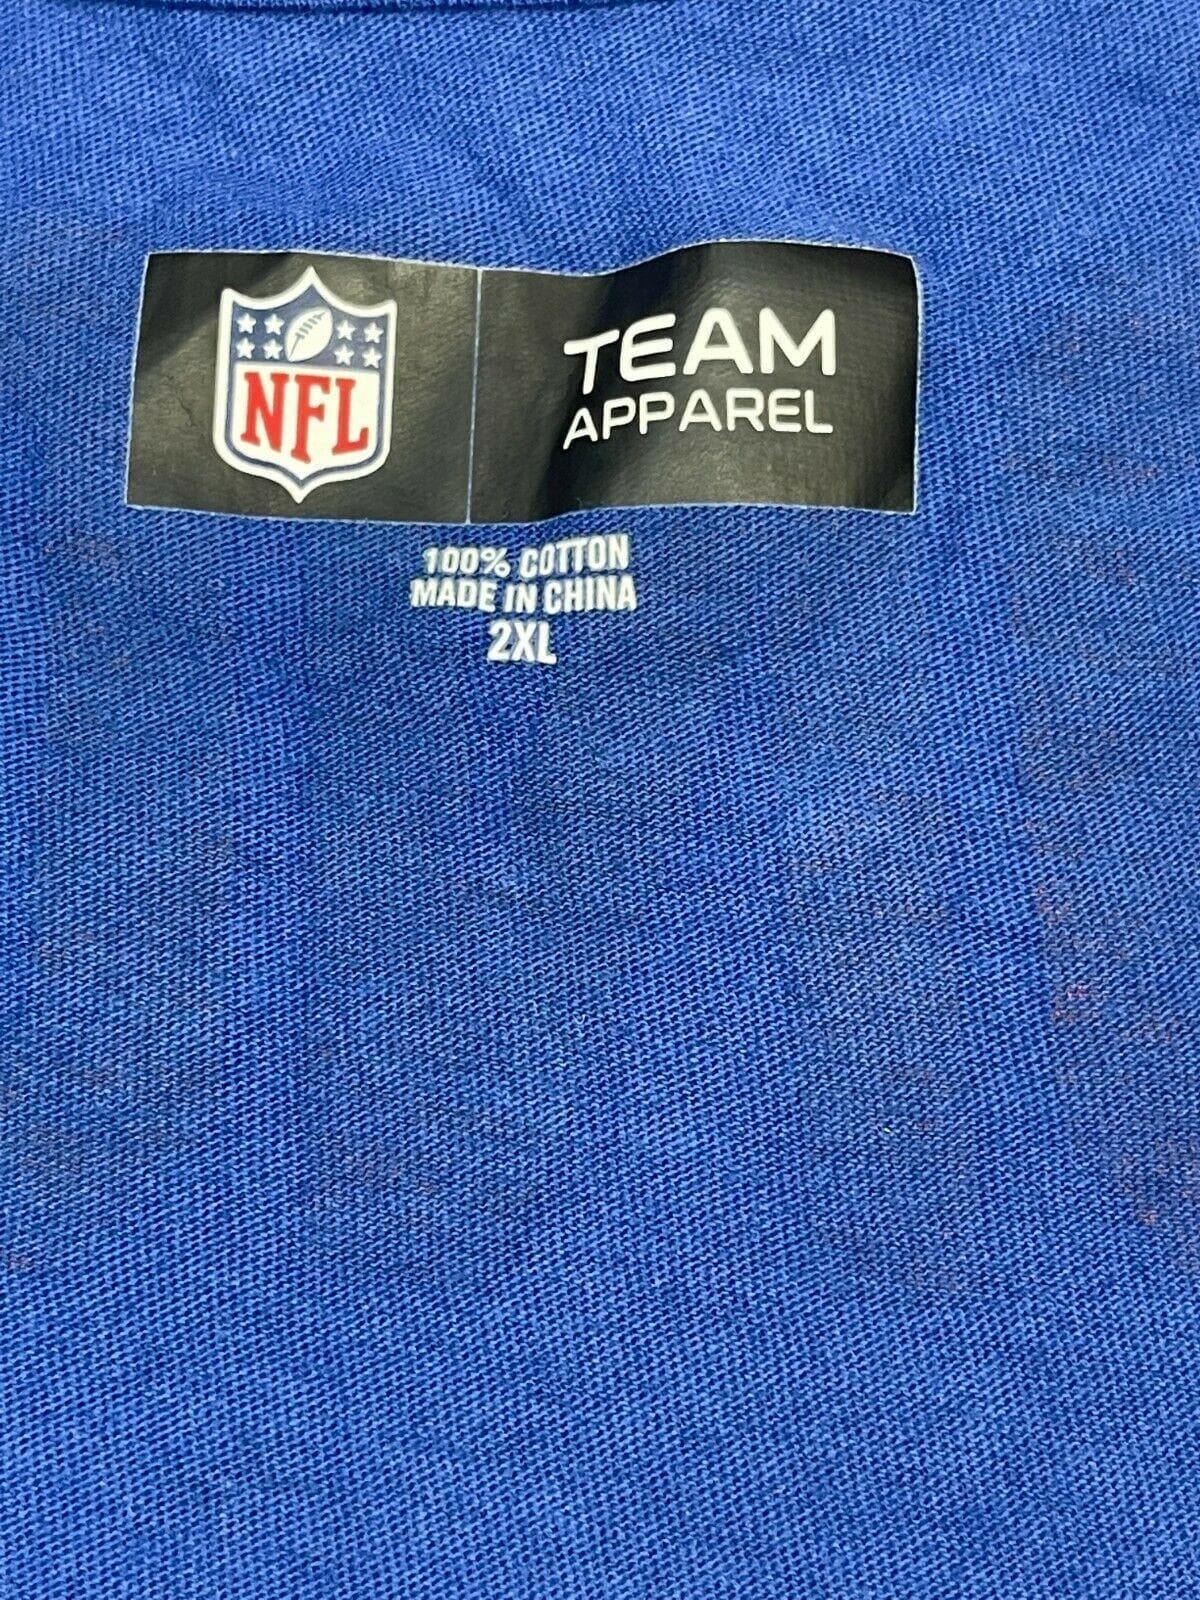 NFL Denver Broncos Retro Logo Laced Neck T-Shirt Women's 2X-Large NWT